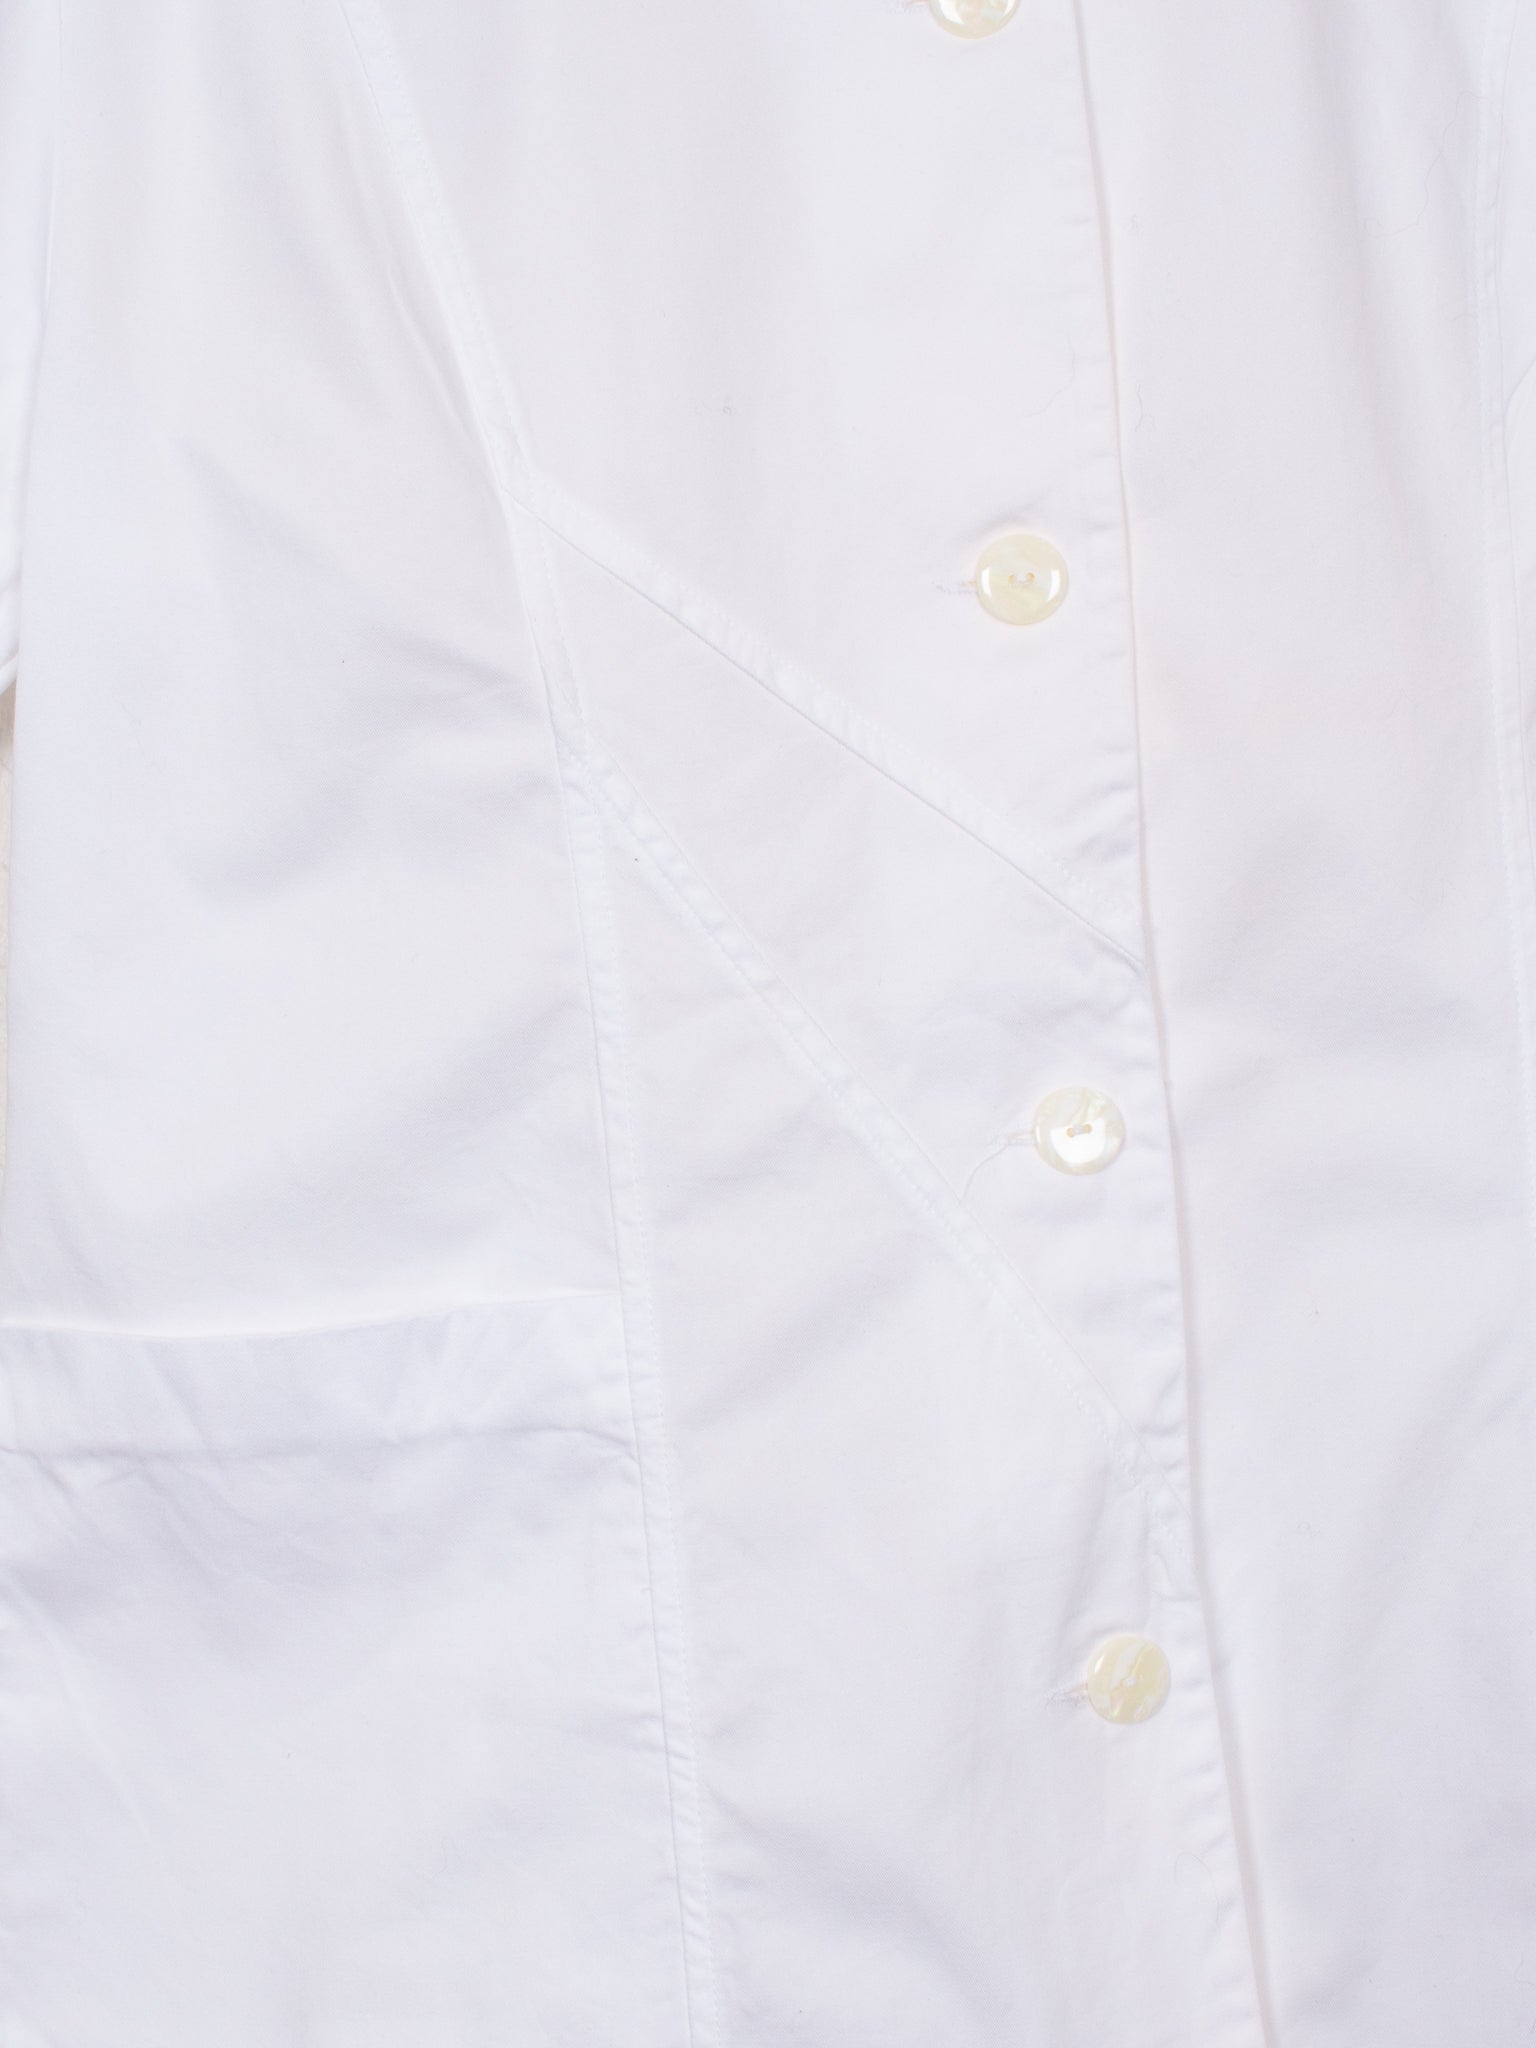 shirts & blouses 70s German Nurse Shirt - L